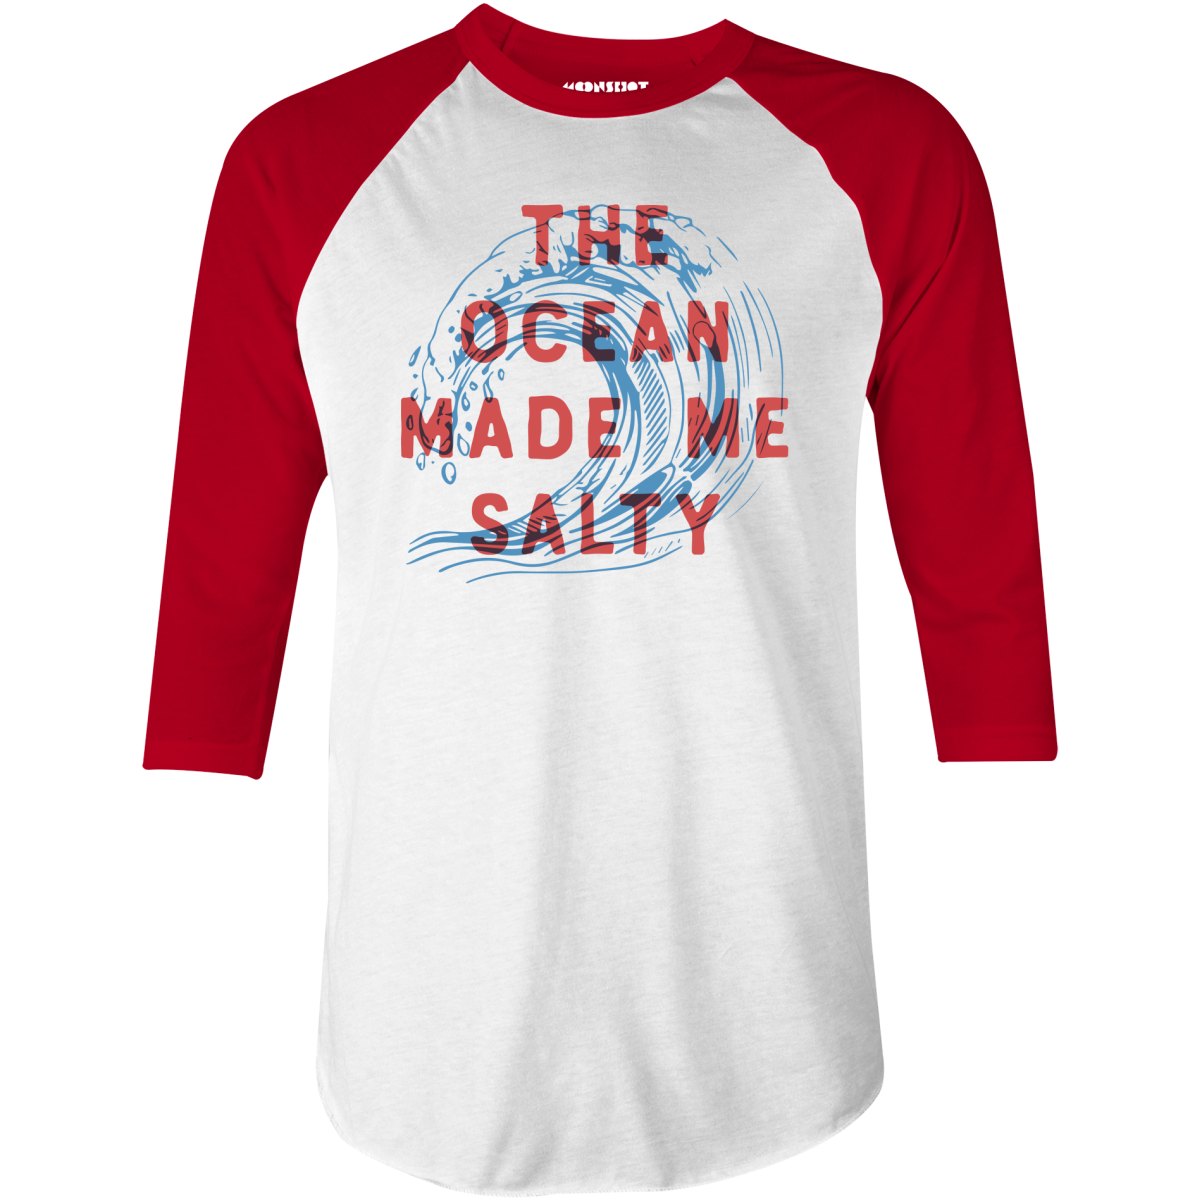 The Ocean Made Me Salty - 3/4 Sleeve Raglan T-Shirt